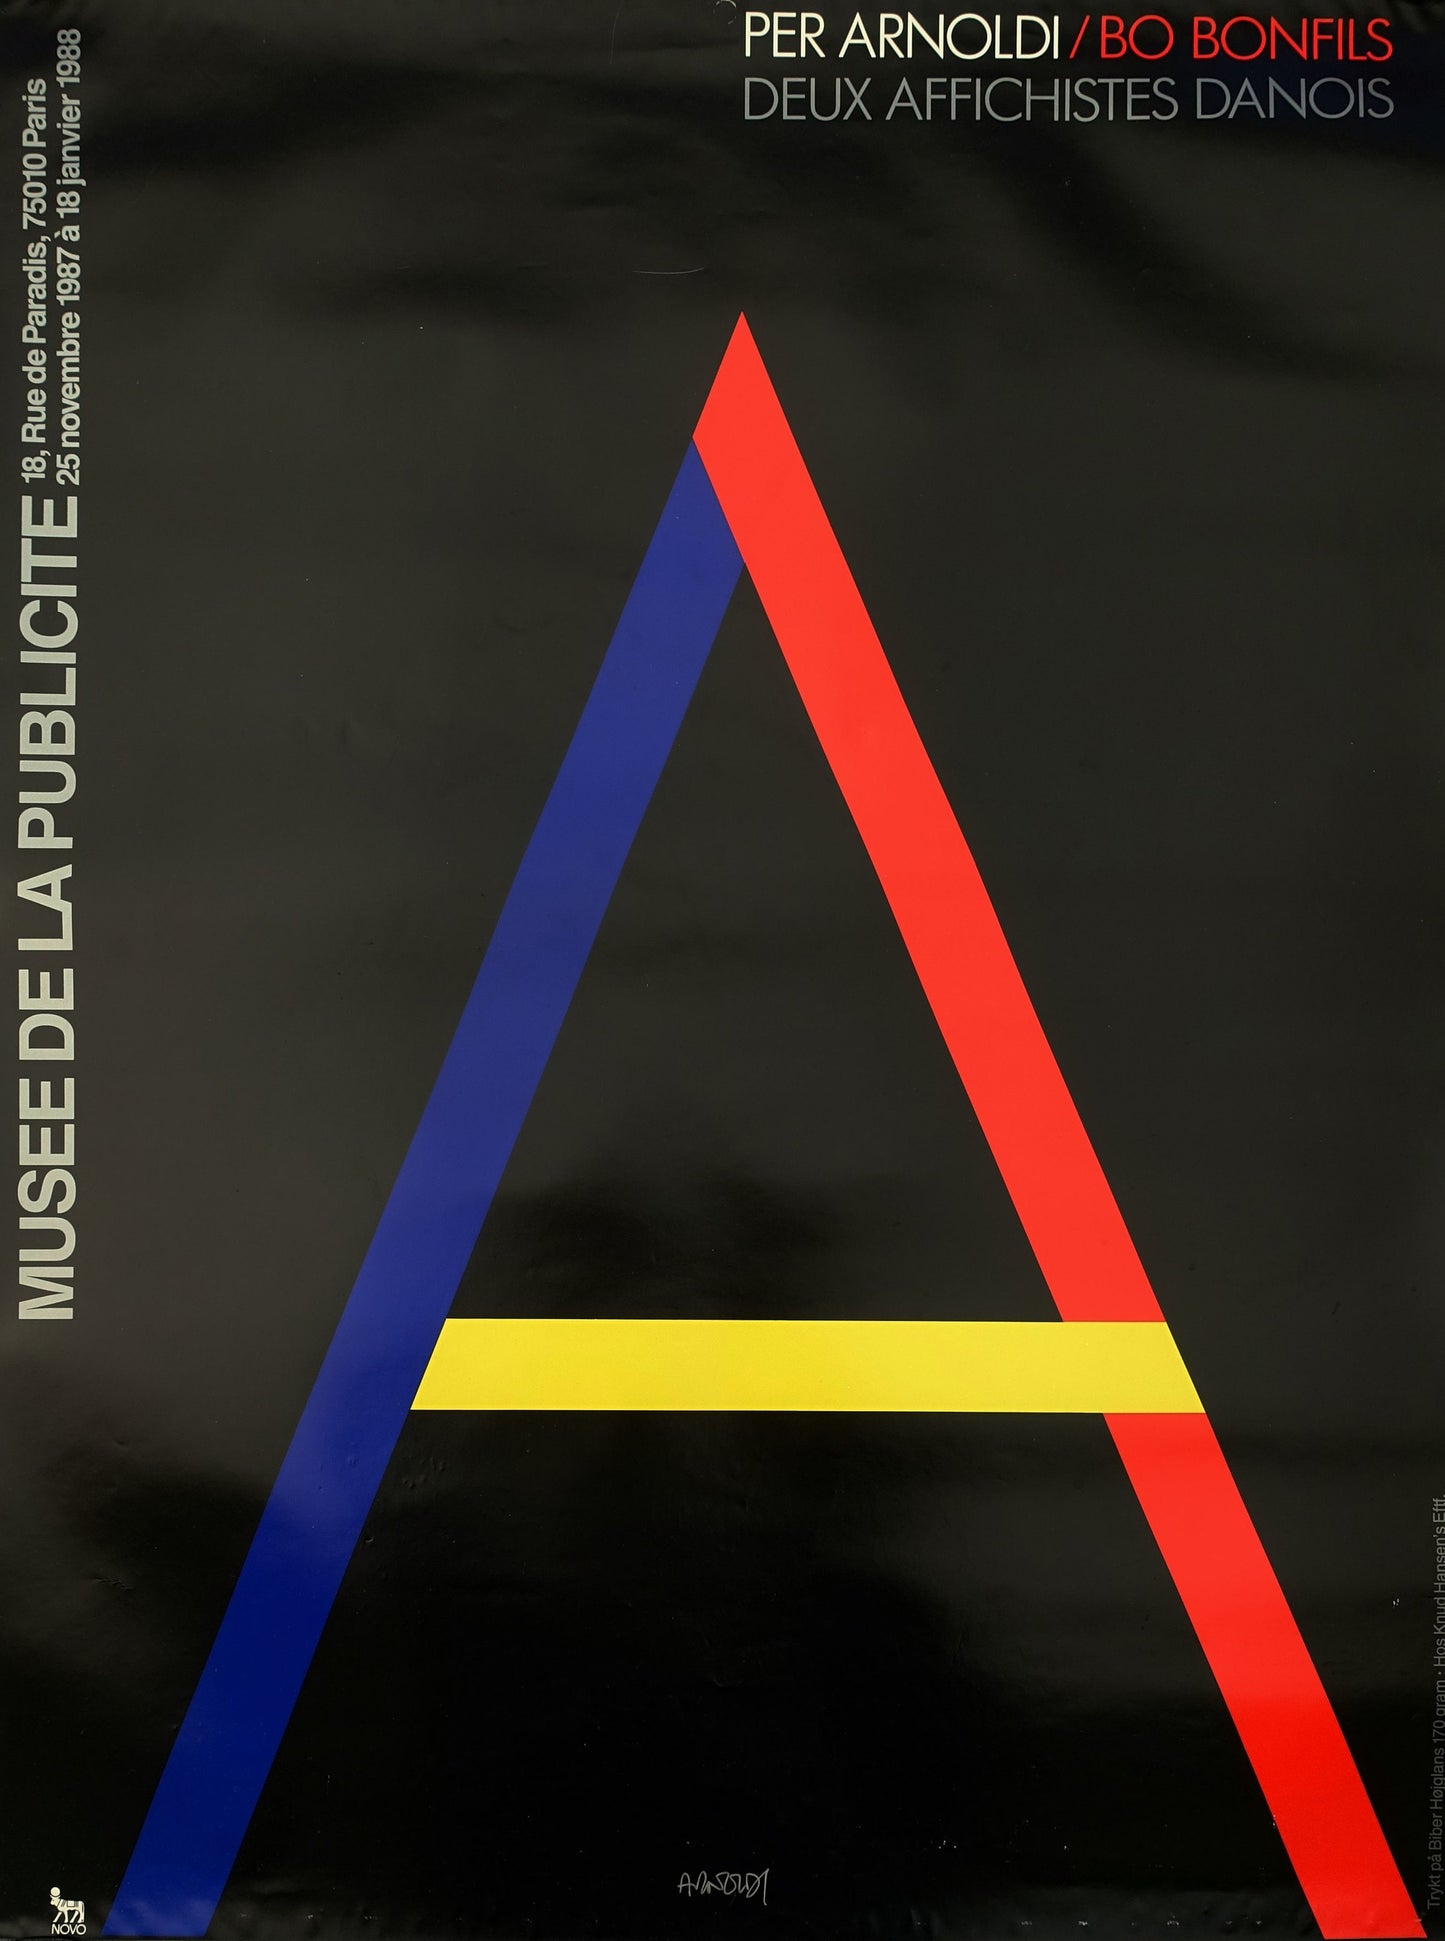 1987 Arnoldi Exhibition Poster - Original Vintage Poster